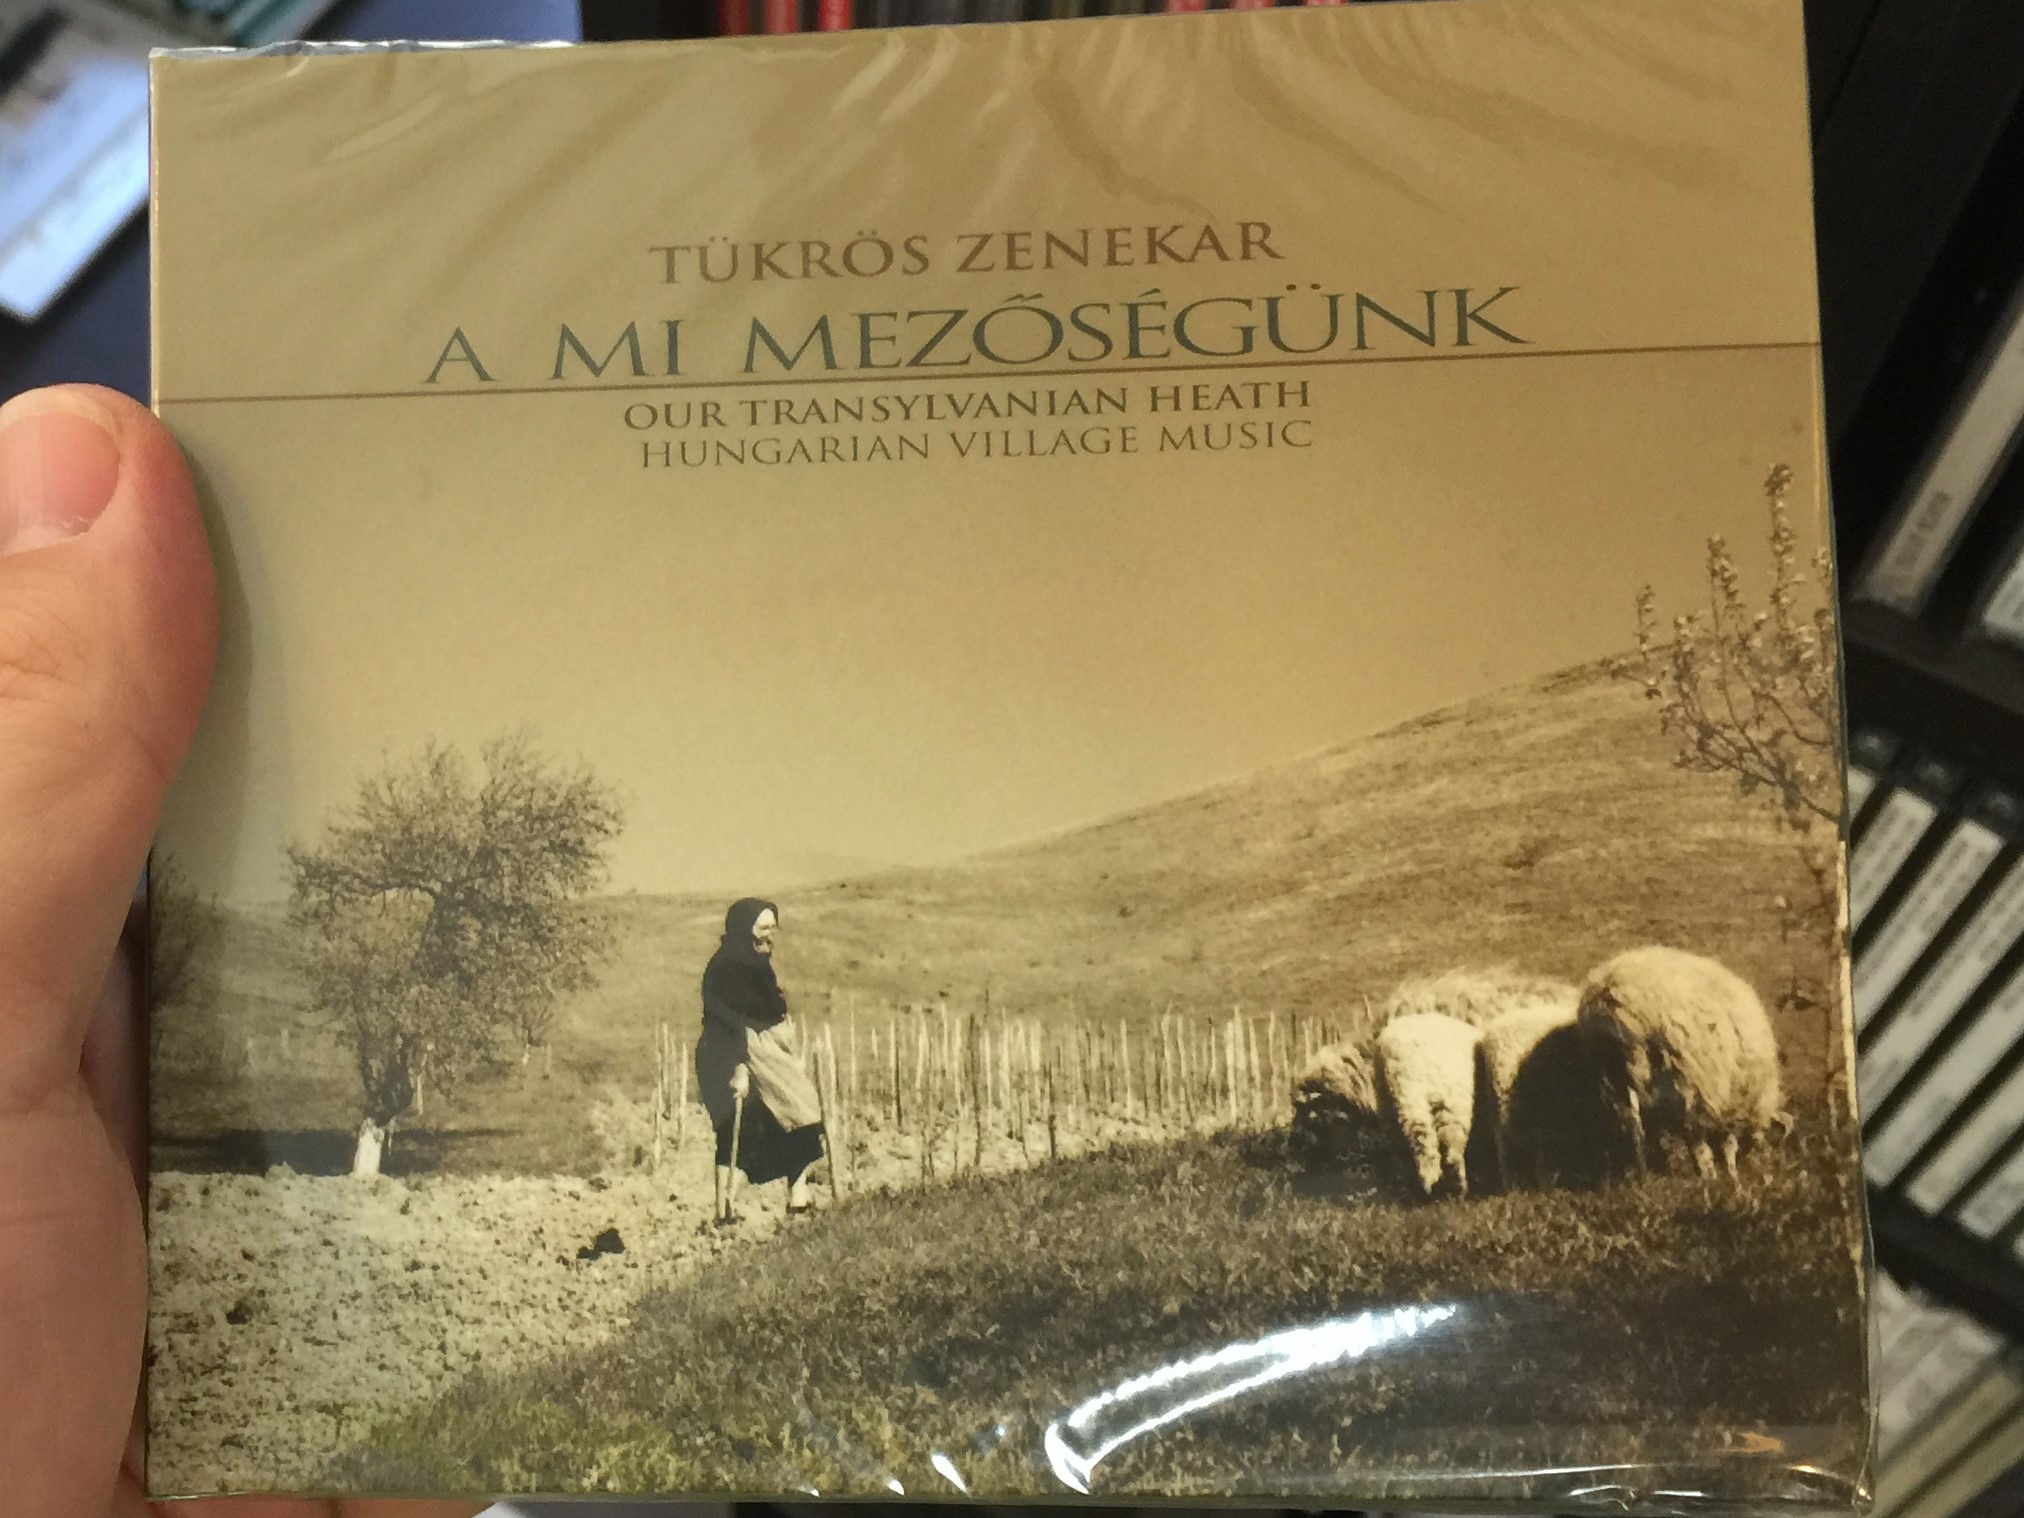 t-kr-s-zenekar-a-mi-mez-s-g-nk-our-transylvanian-heath-hungarian-village-music-folk-eur-pa-audio-cd-2008-5999548111970-1-.jpg